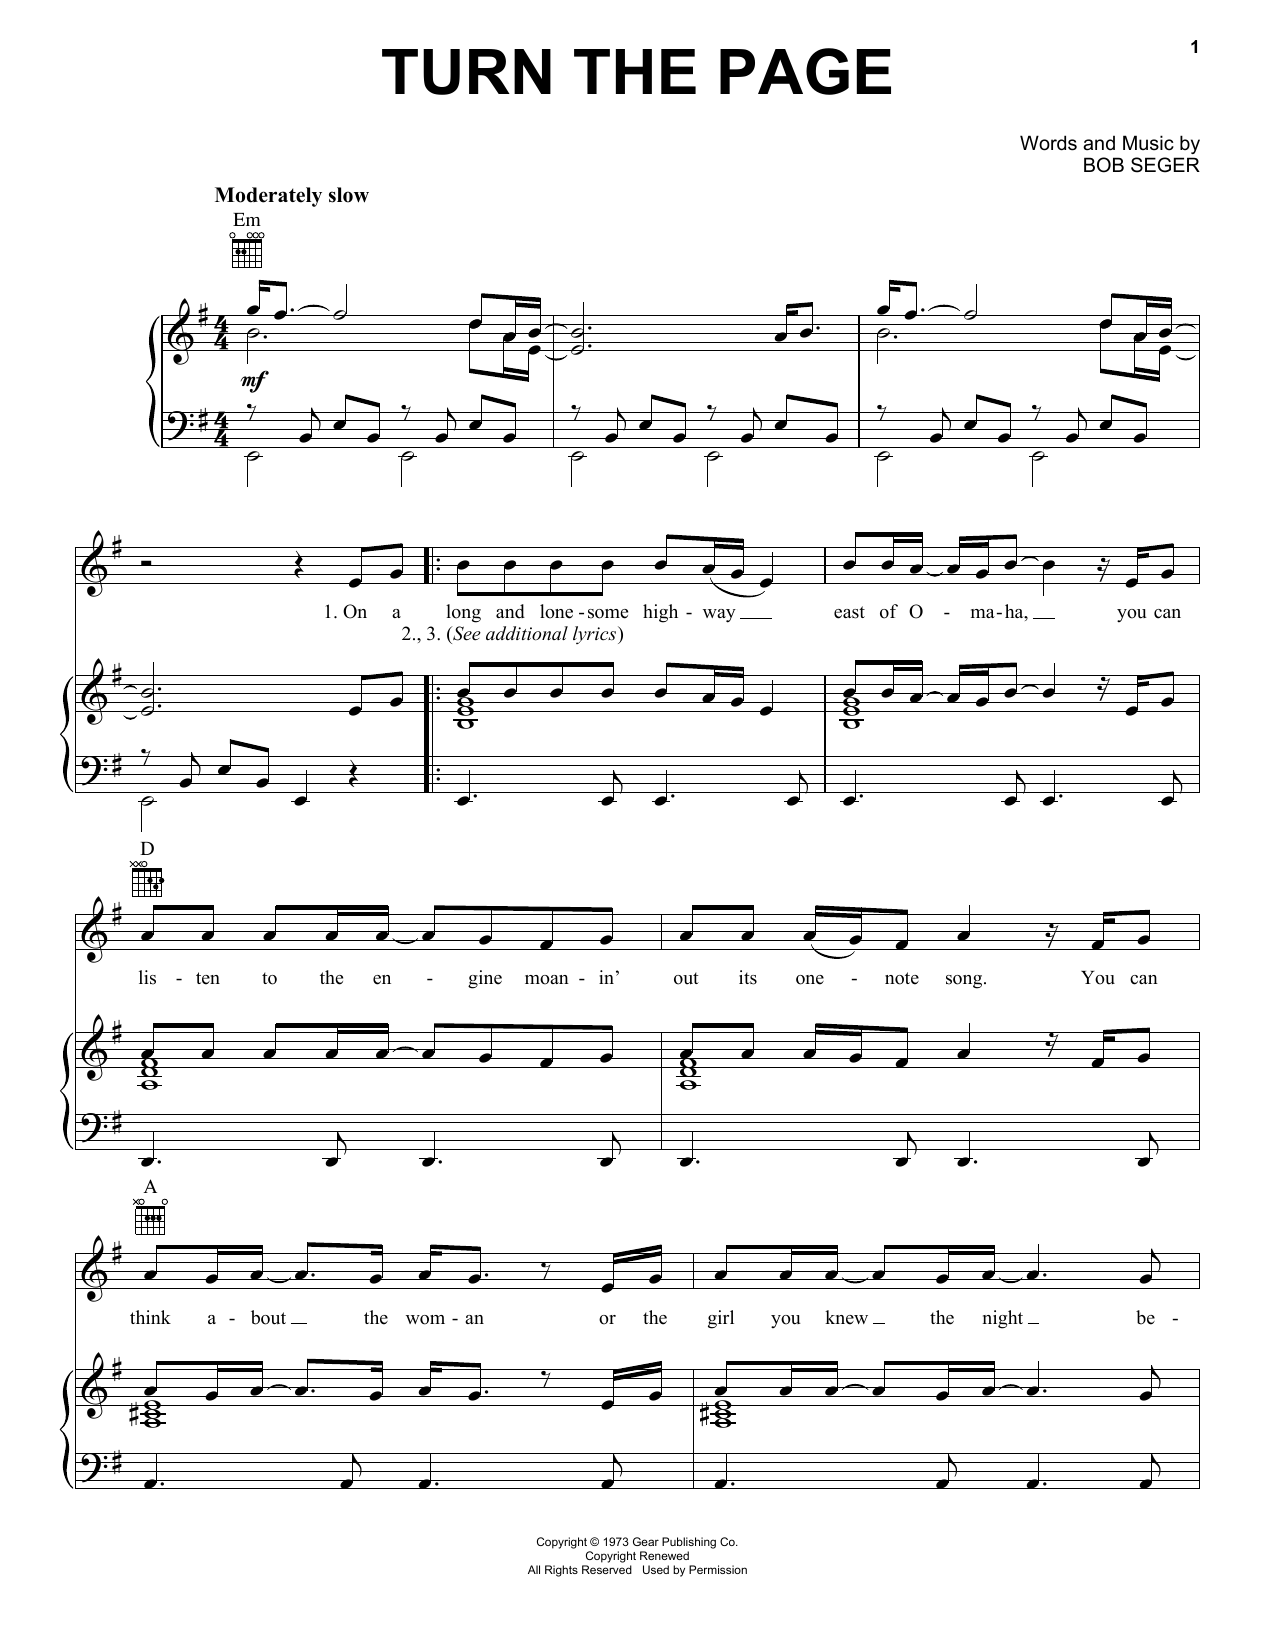 Bob Seger Turn The Page Sheet Music Notes & Chords for Ukulele - Download or Print PDF